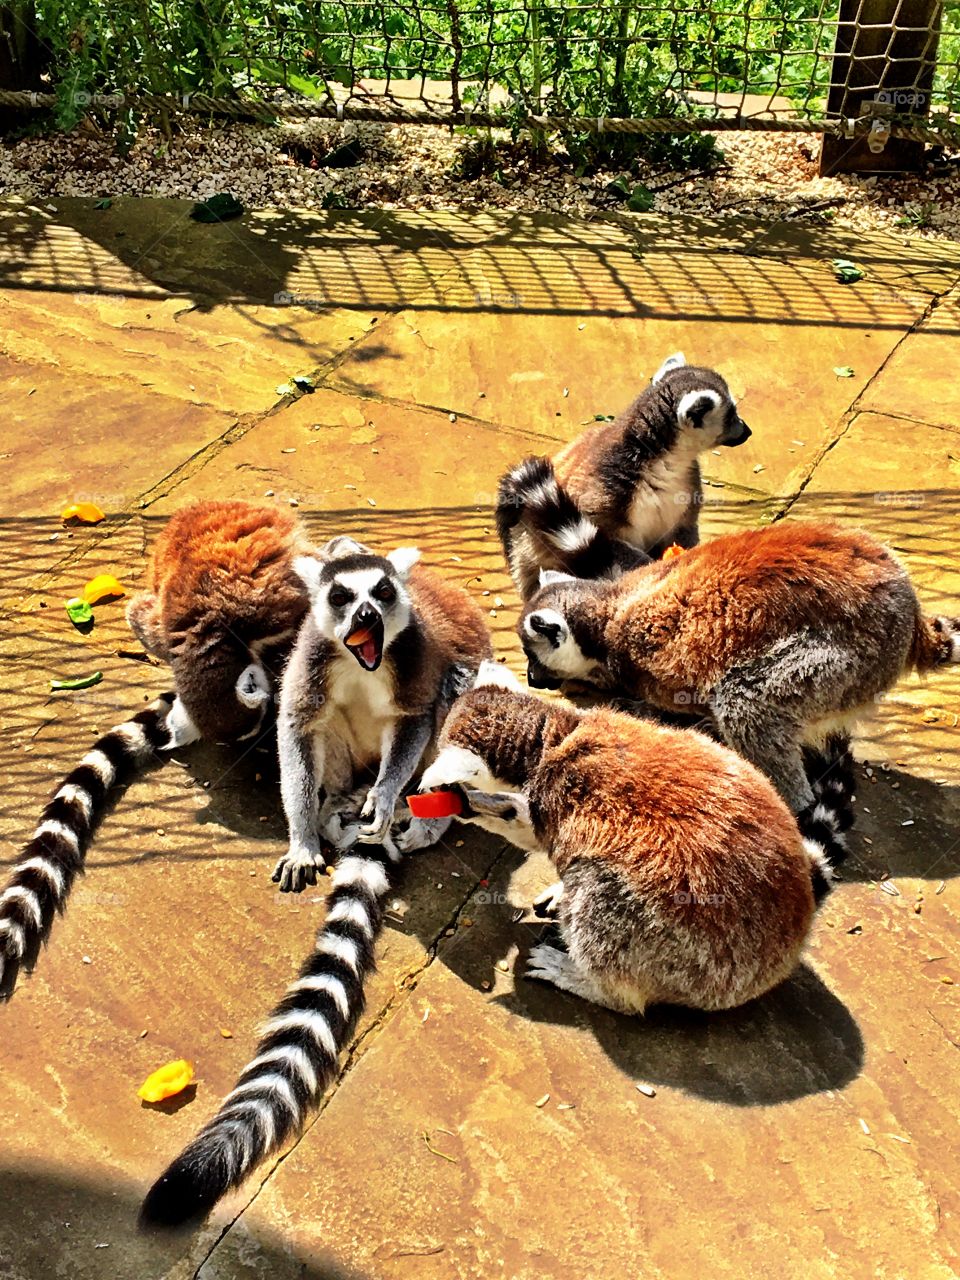 Group of ring-tailed lemurs eating fruit